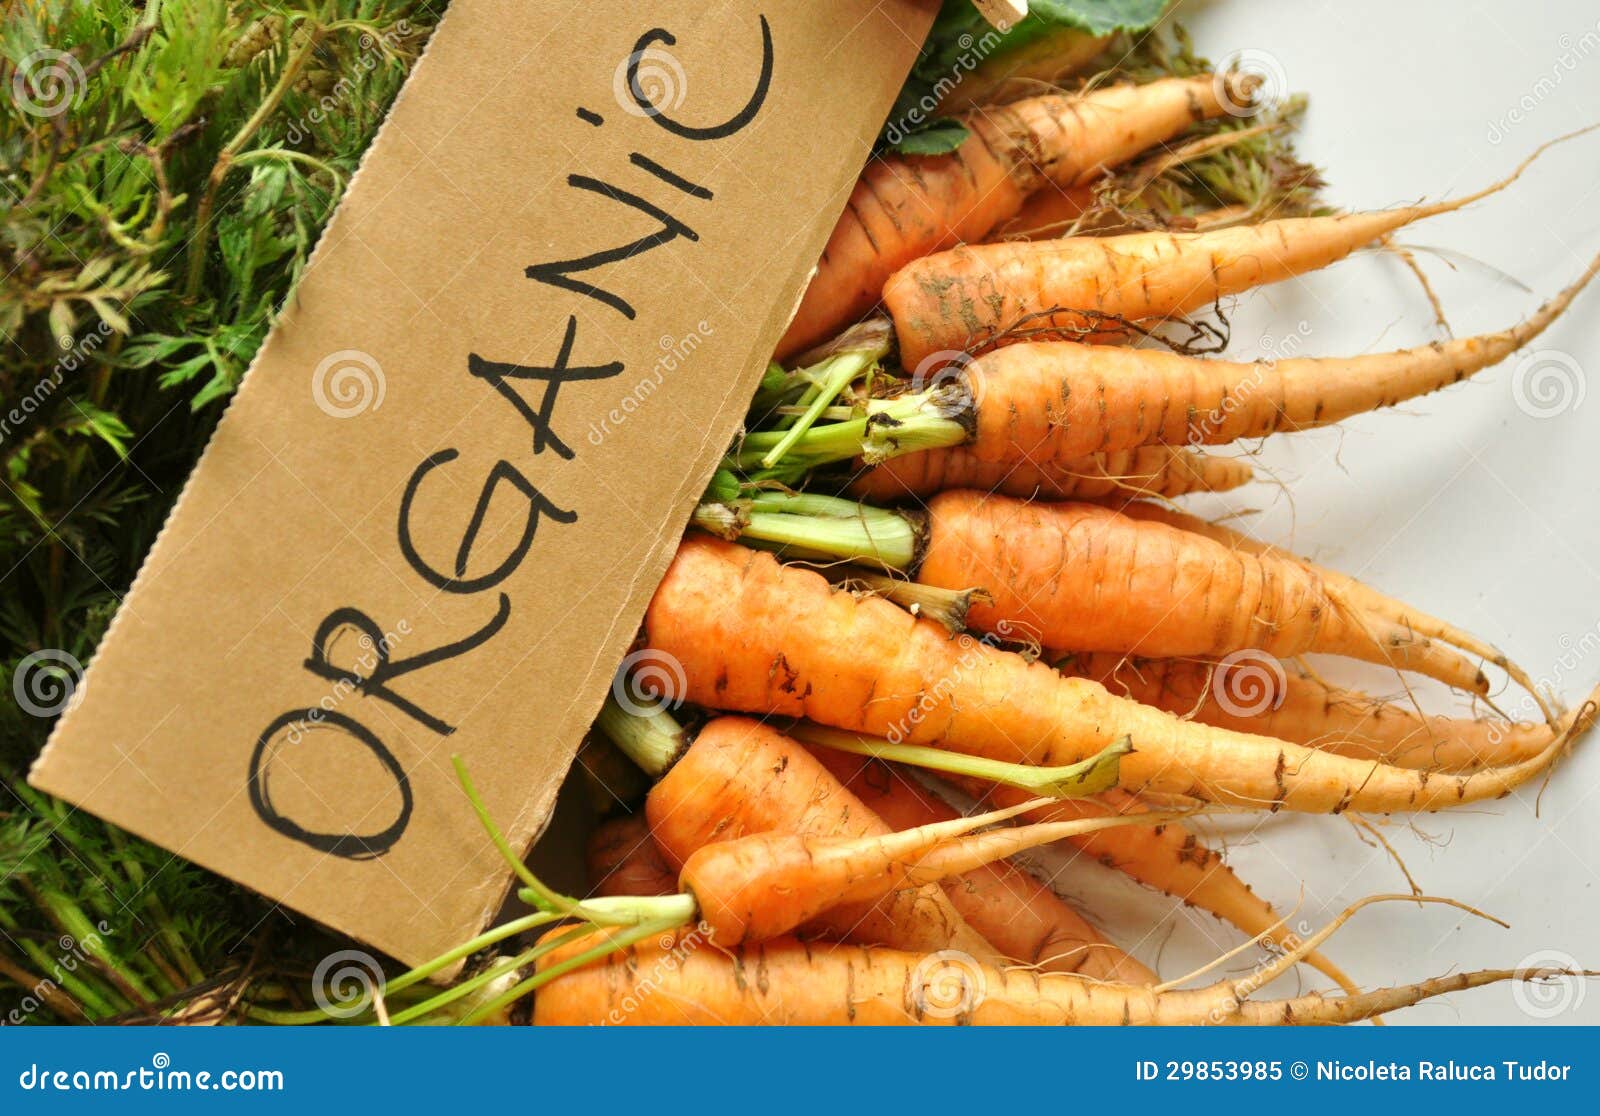 organic , real veggies : carrots